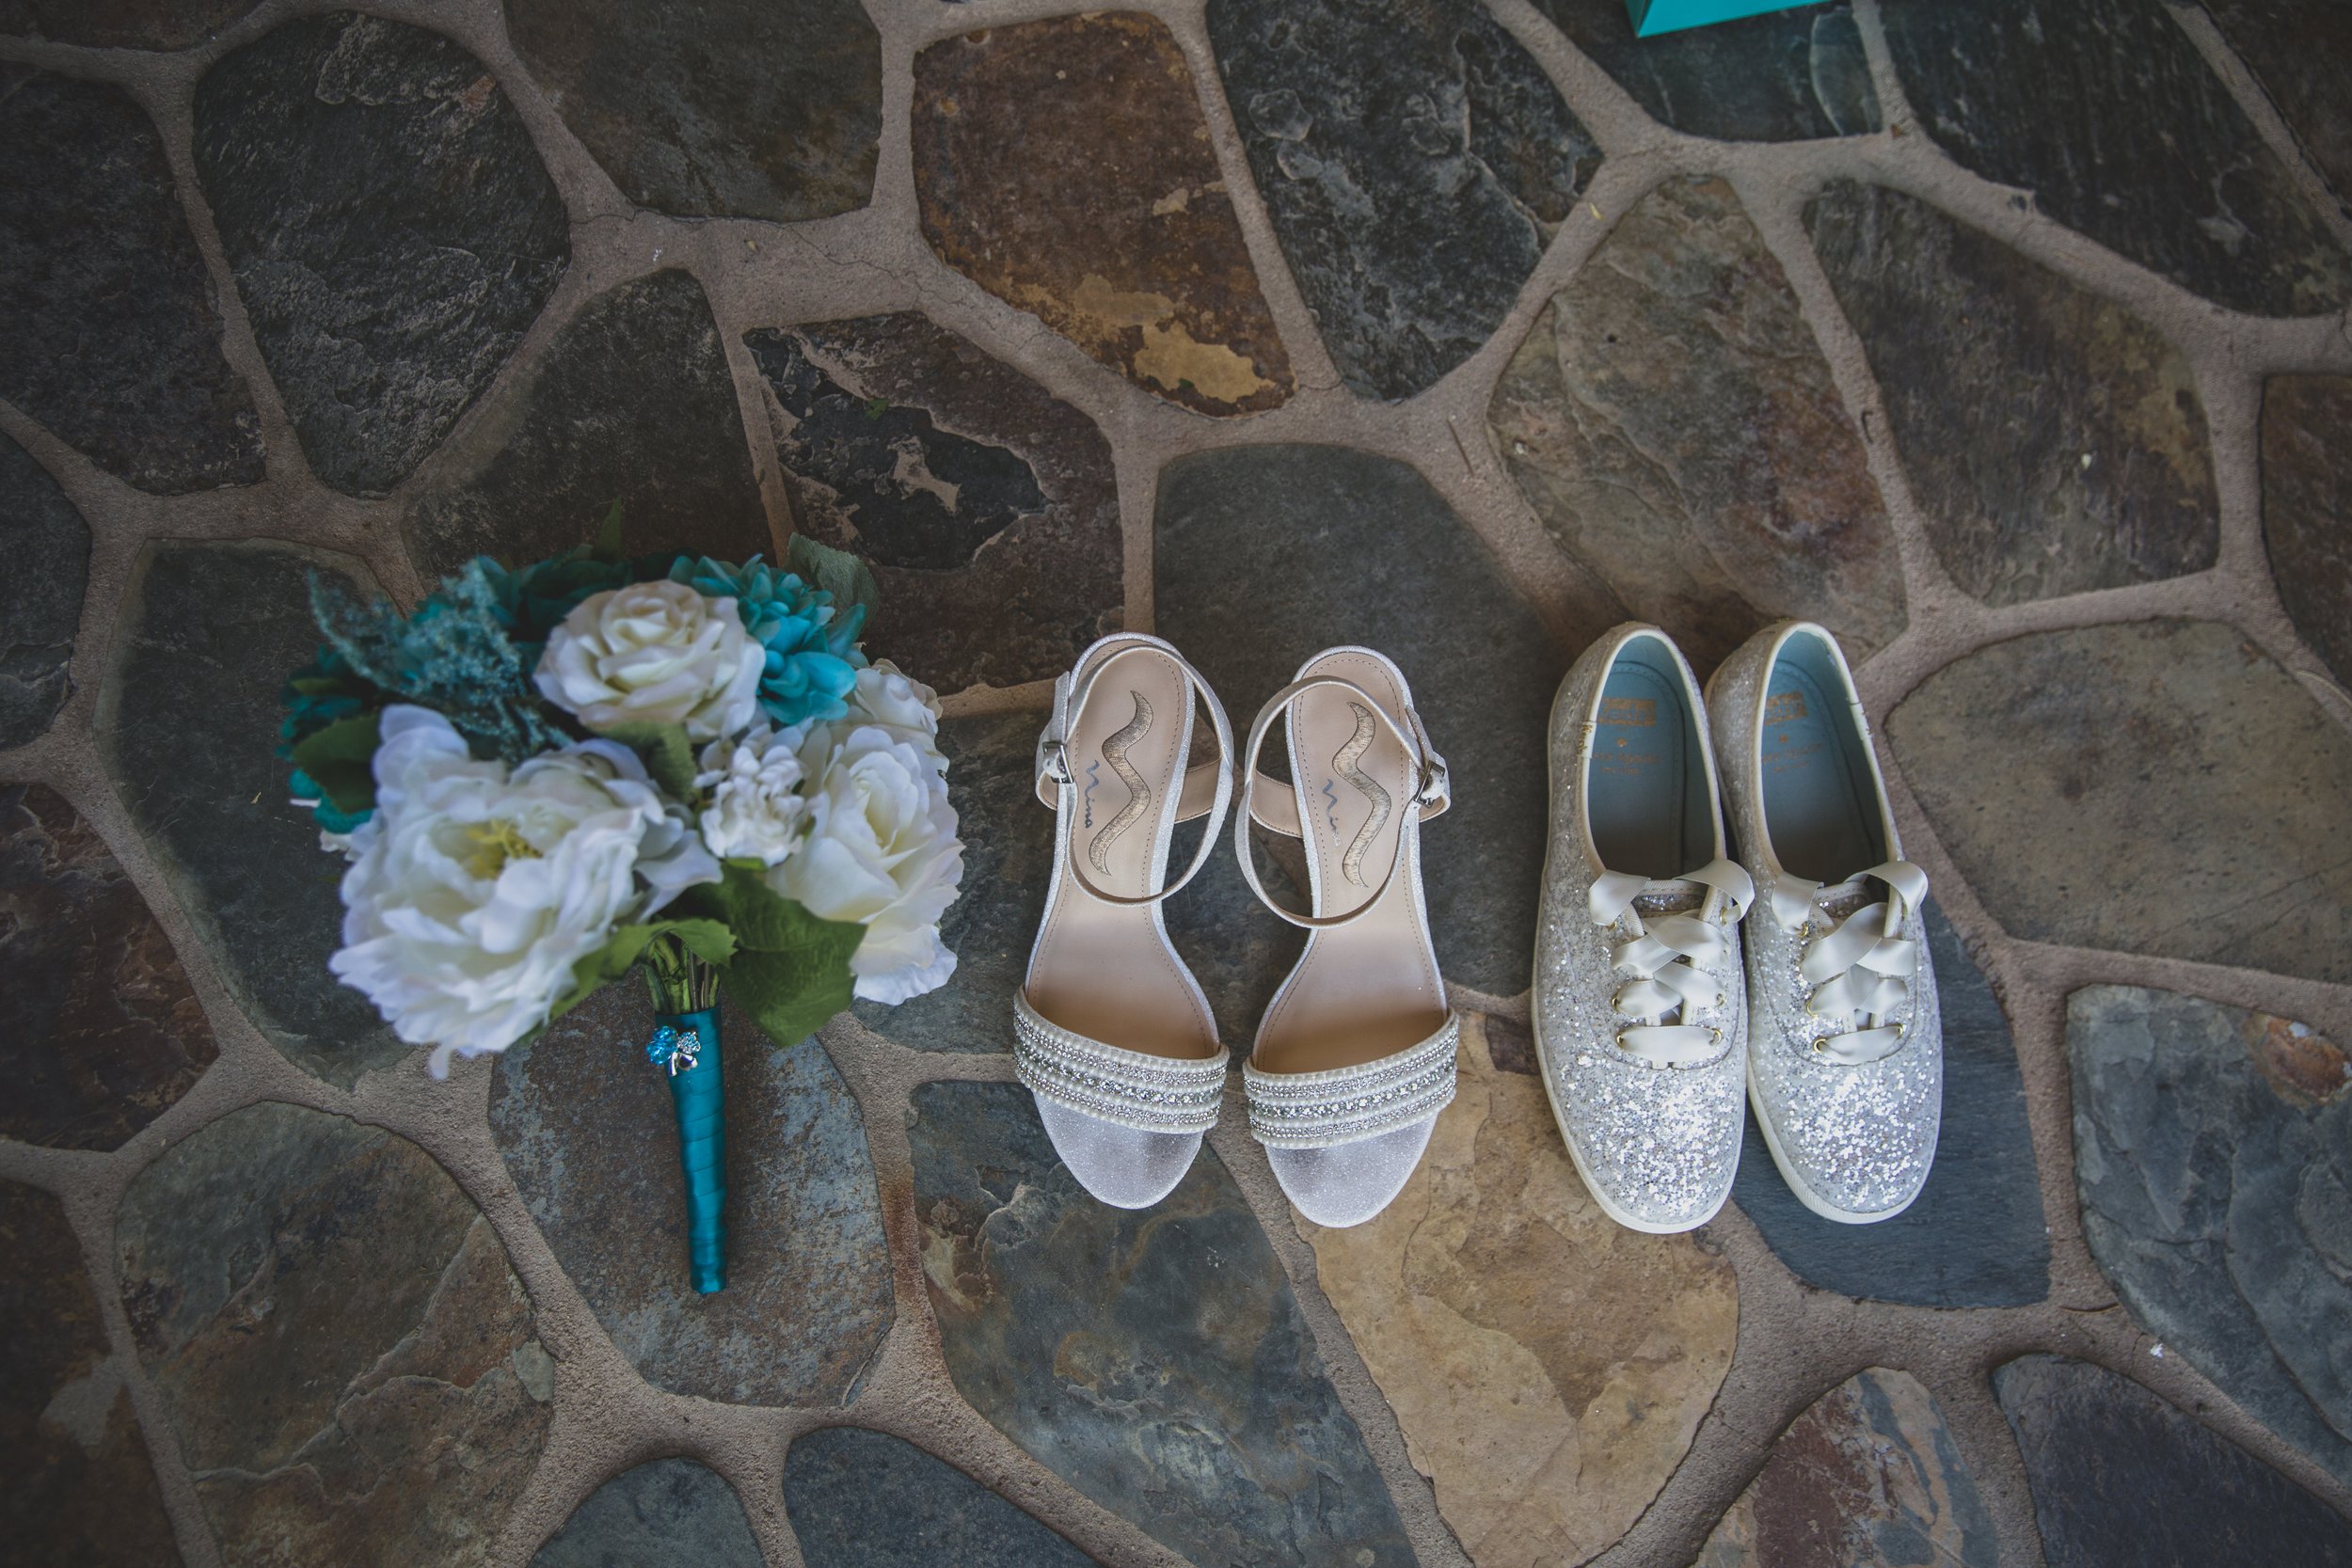  Details of Bride’s bouquet and shoes at Arizona wedding by Northern Arizona Wedding Photographer, Jennifer Lind Schutsky.  